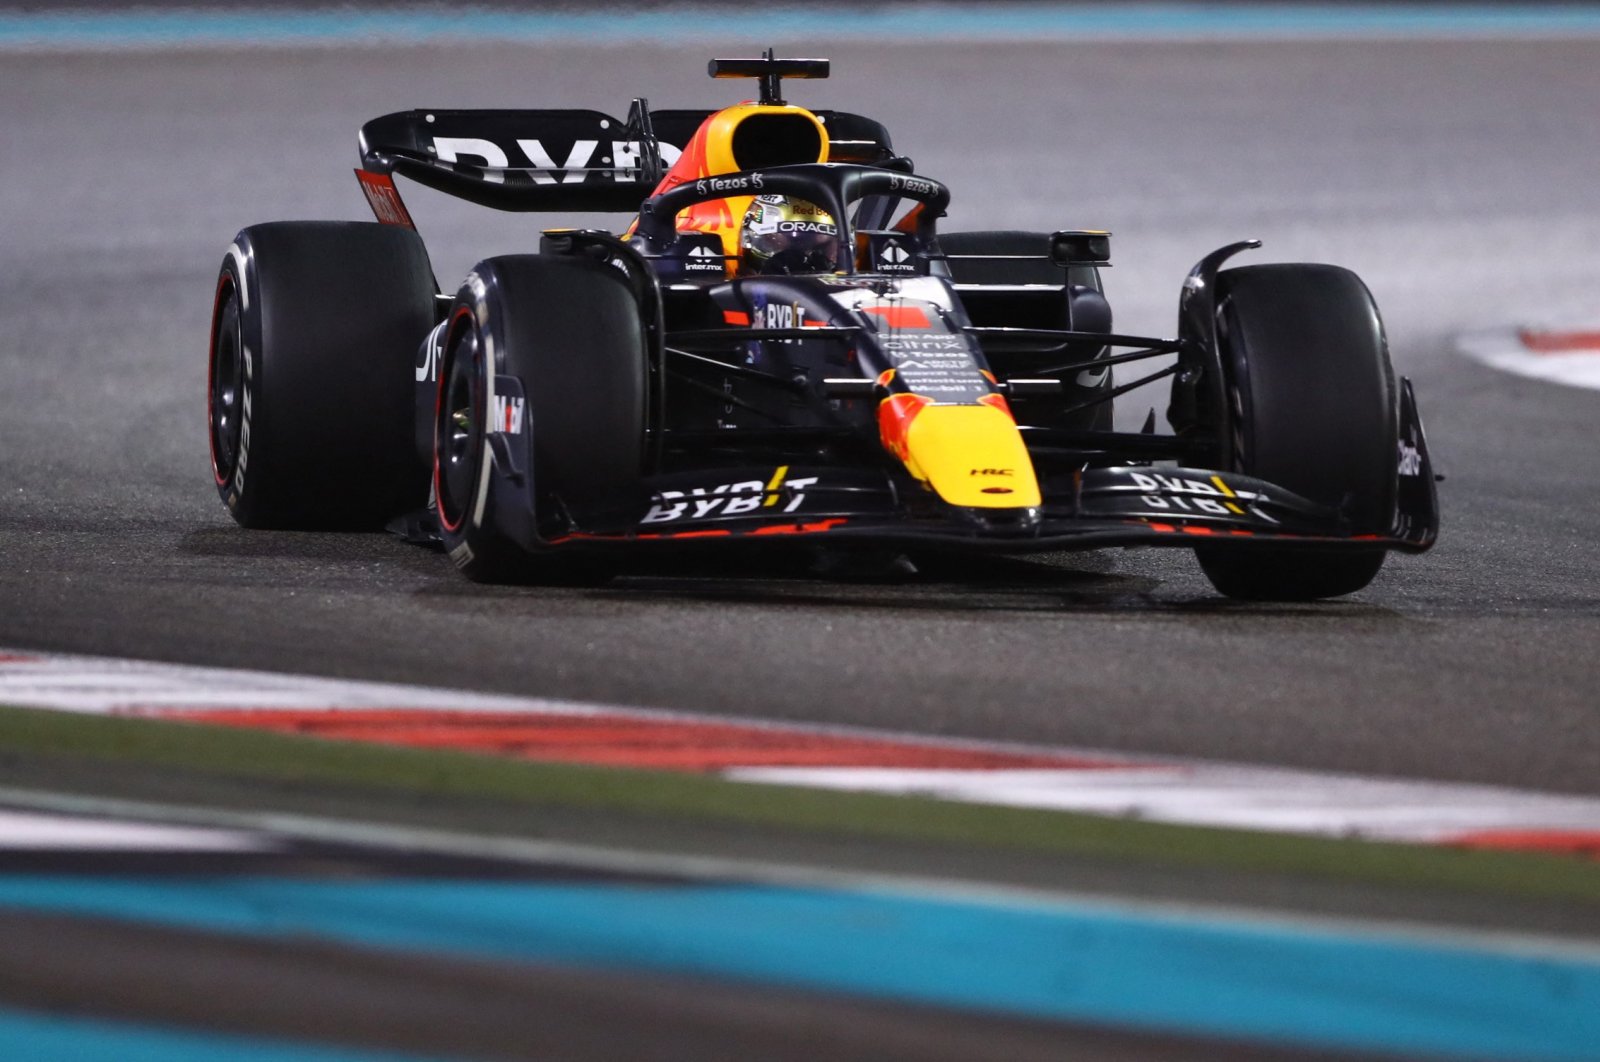 Grand Prix Belanda akan melanjutkan jadwal balapan F1 hingga 2025